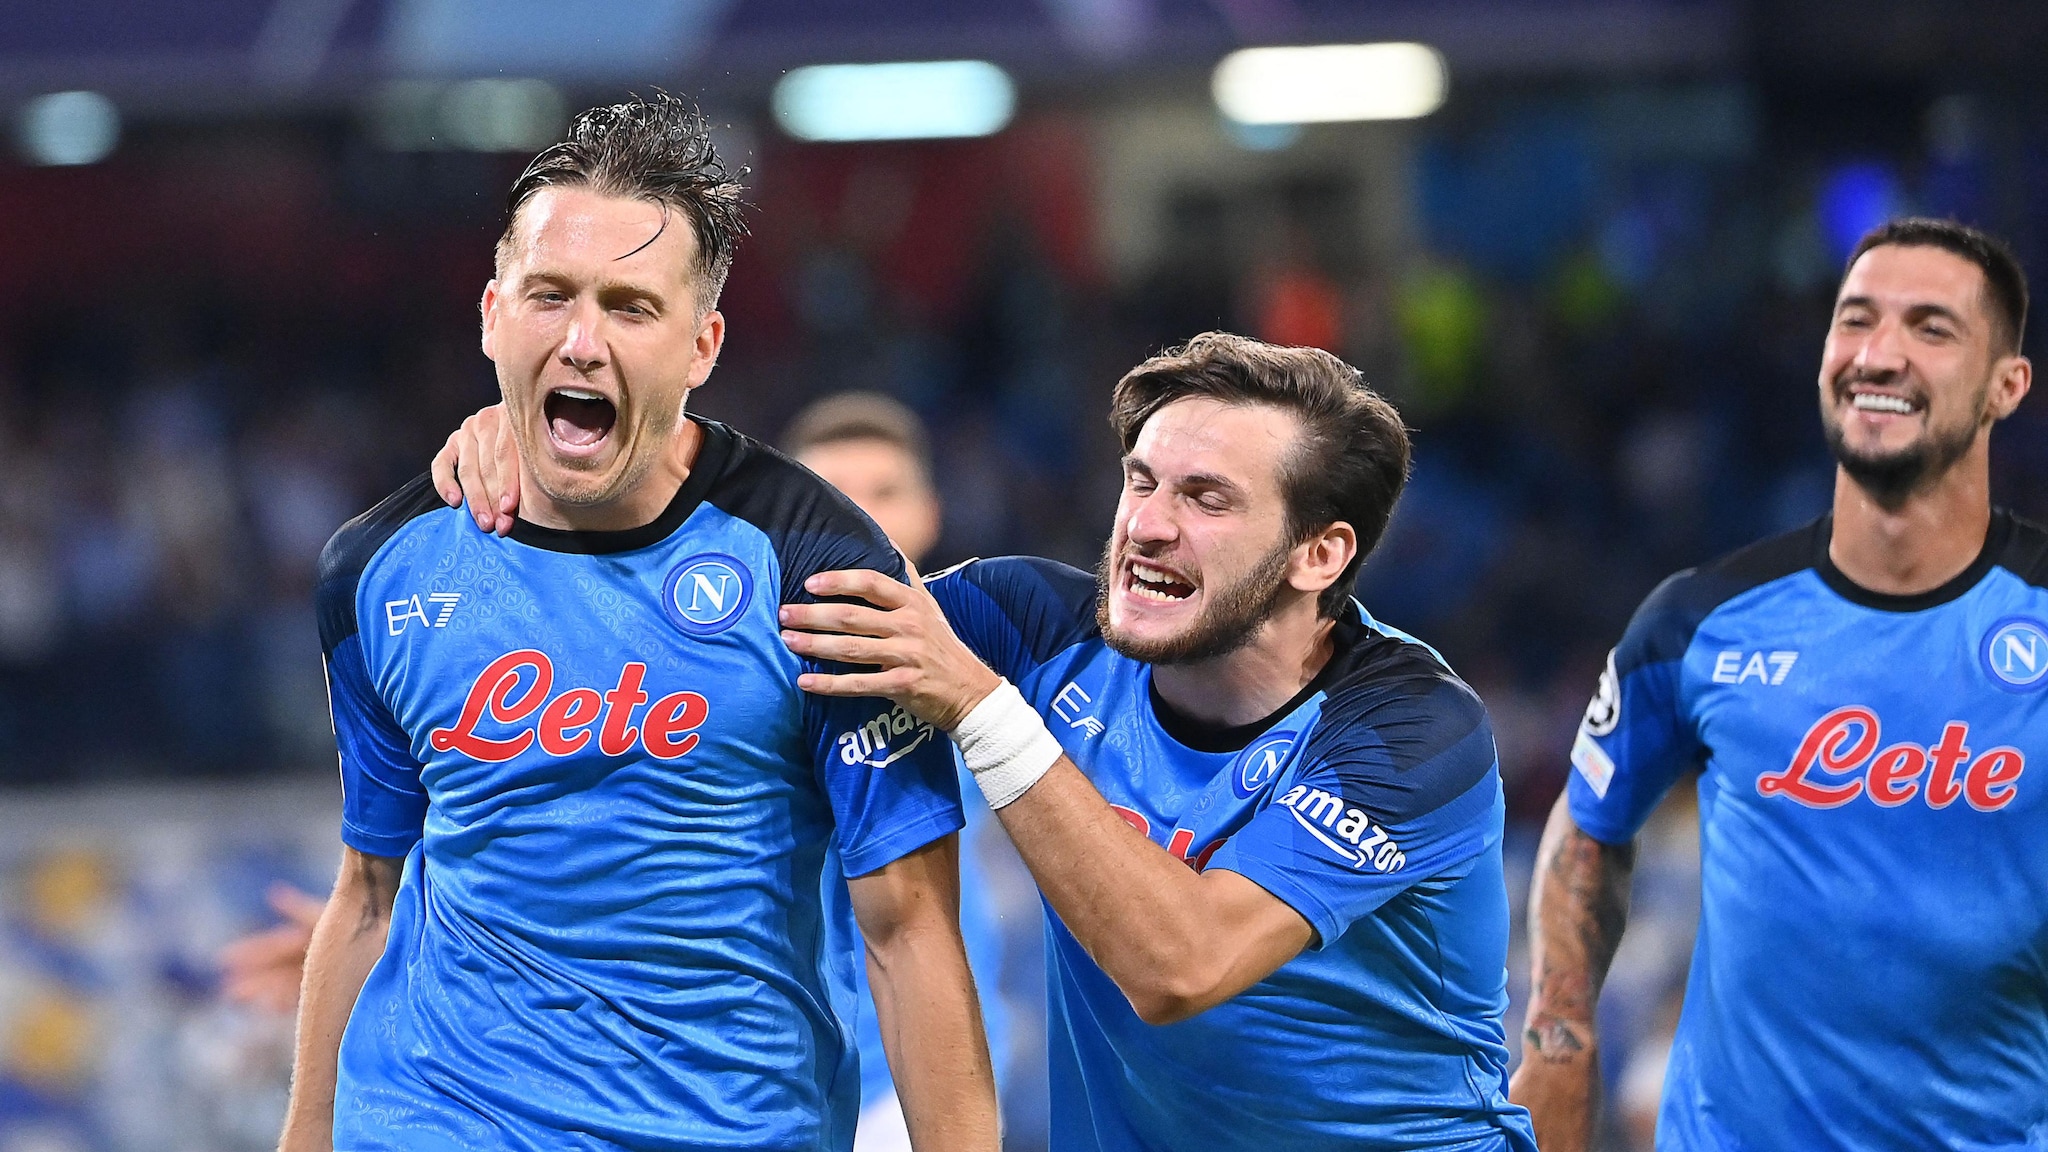 Pertandingan dan ringkasan hari Rabu: Napoli bersinar untuk Liverpool dengan kecemerlangan Ajax dan Lewandowski |  Liga Champions